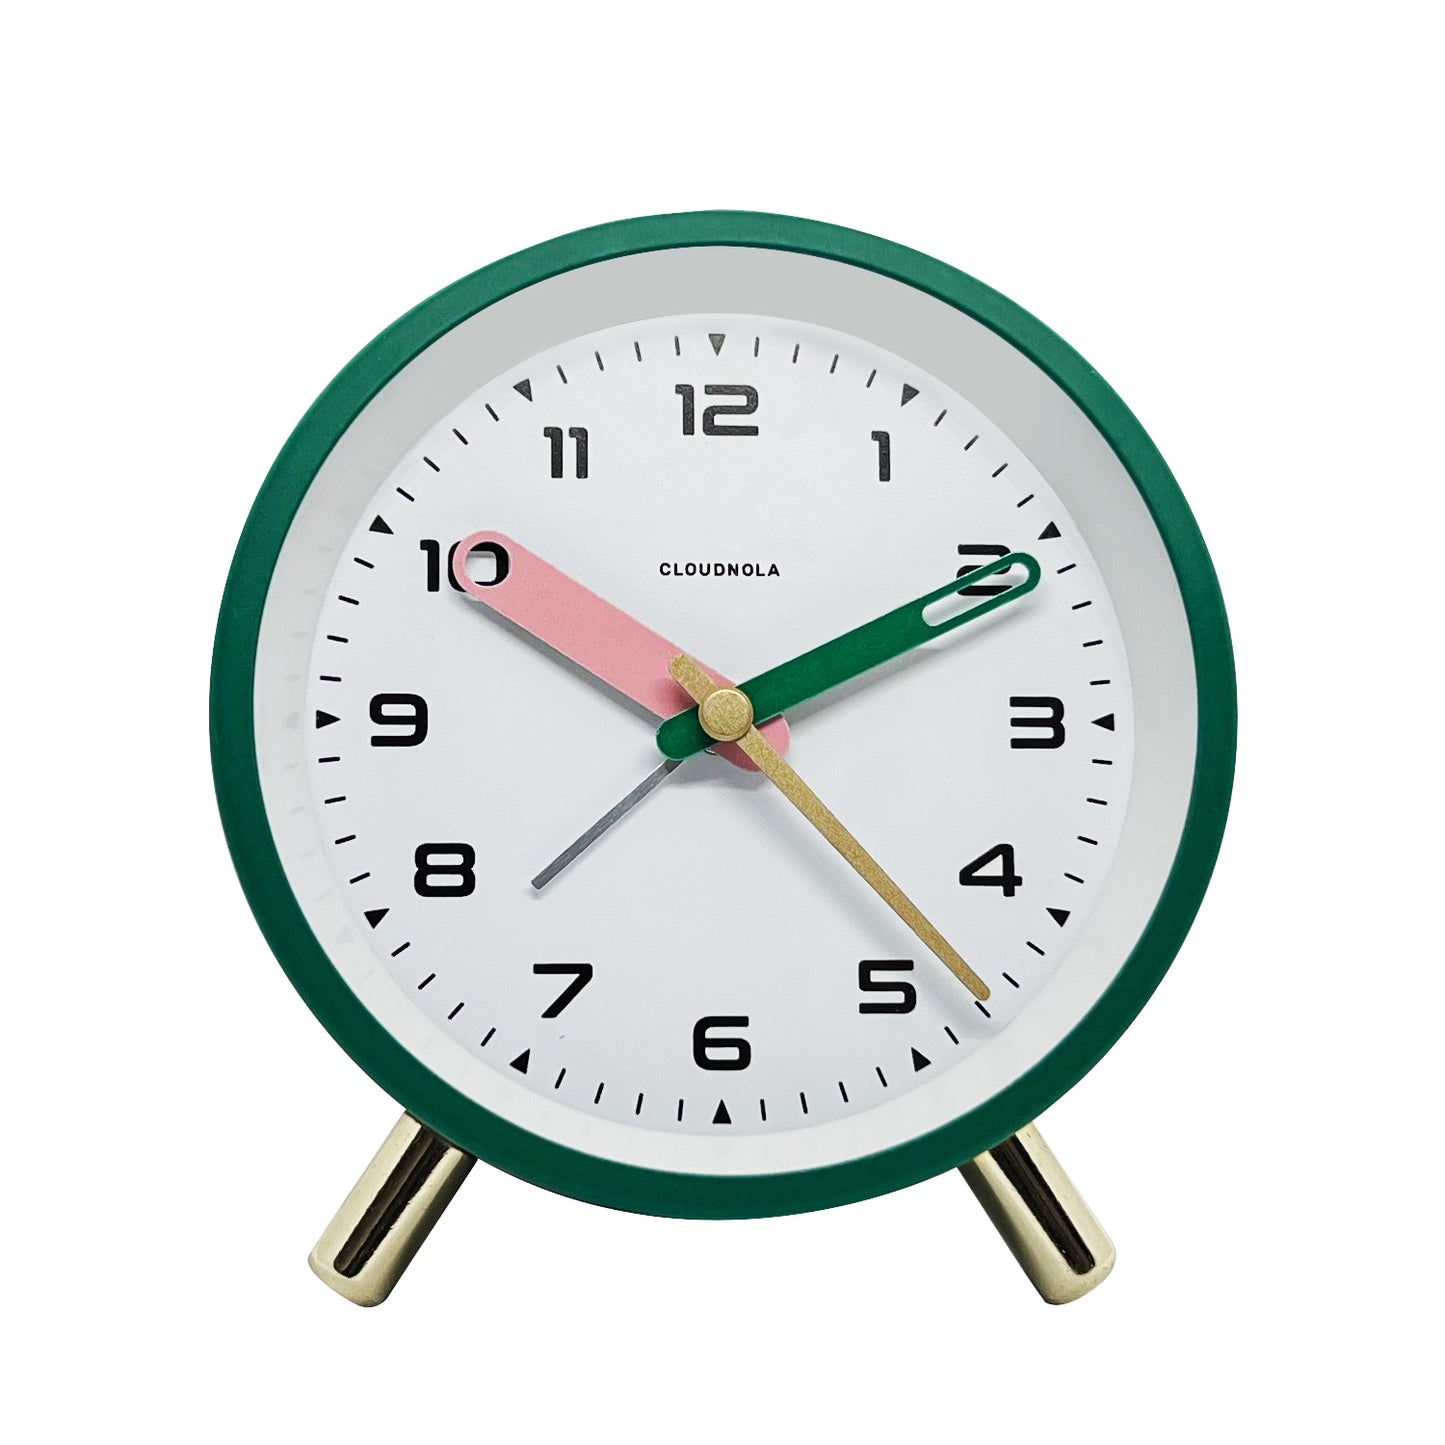 Studio Miami Green Alarm Clock - Vibrant Elegance - Golden-Legged Timepiece